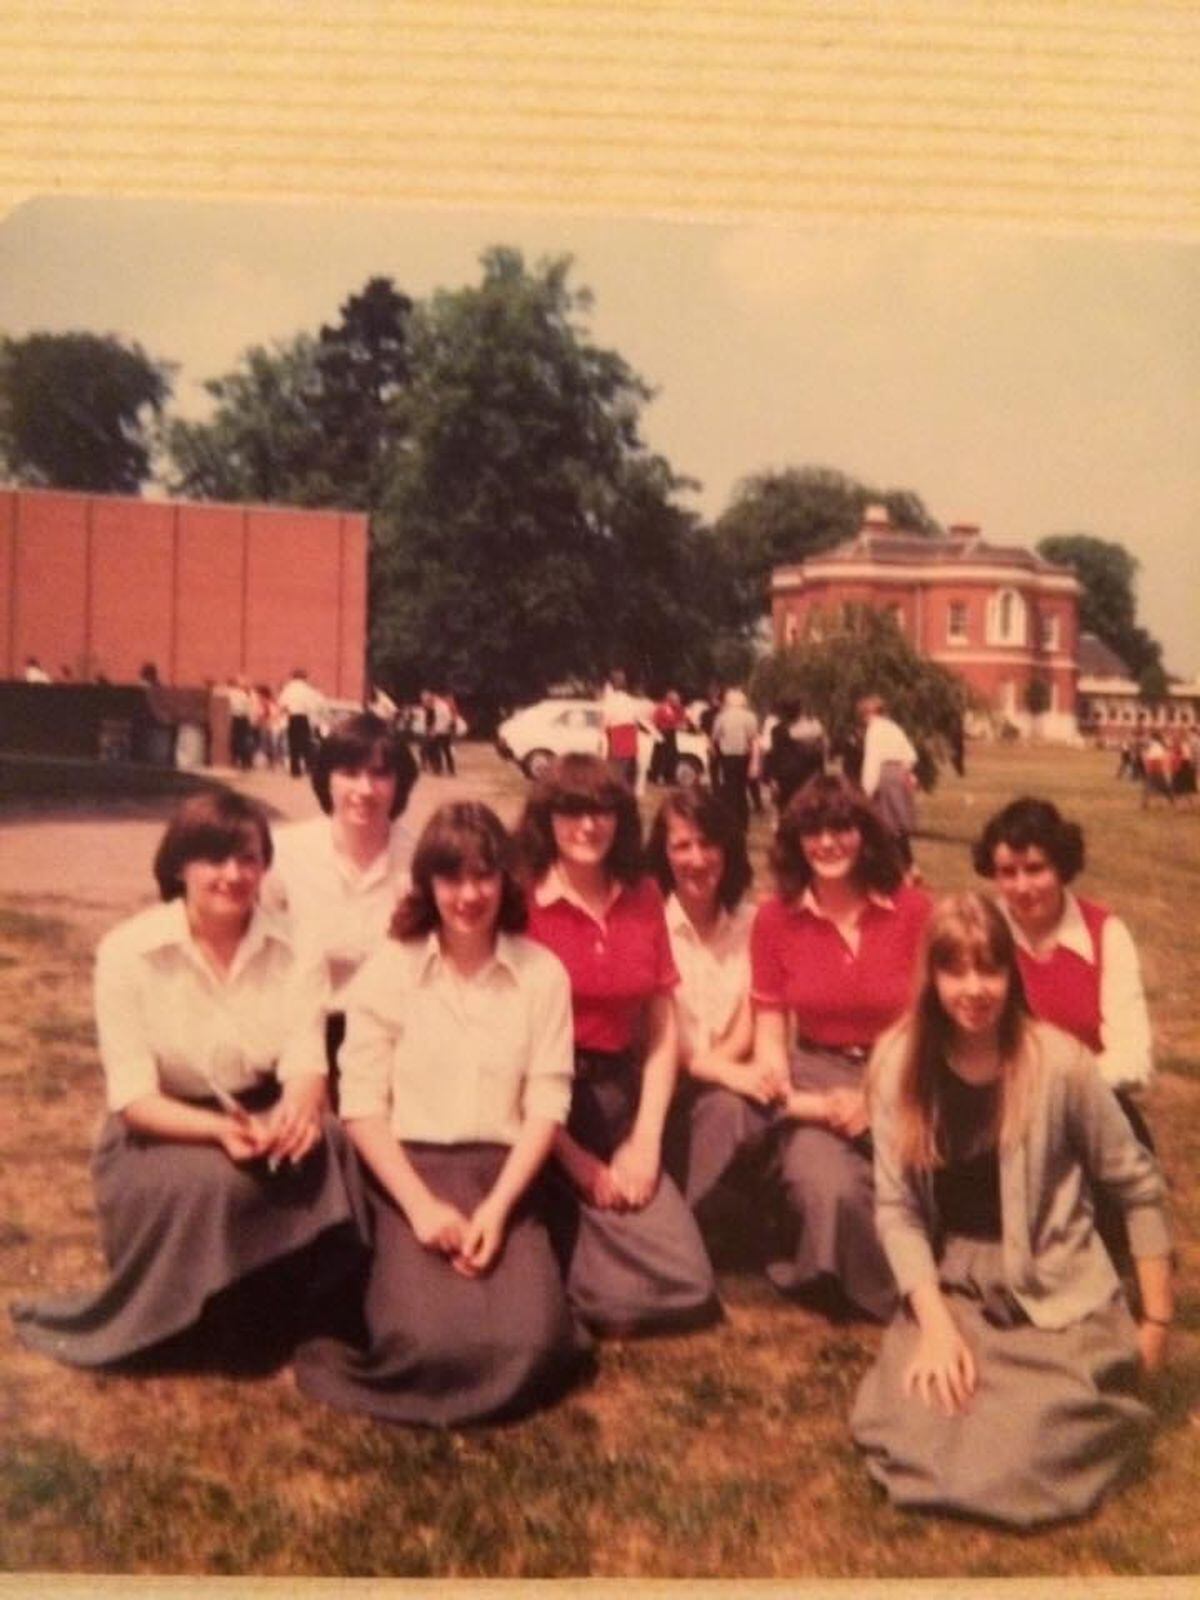 The Grove School class of 1980 will soon reunite 